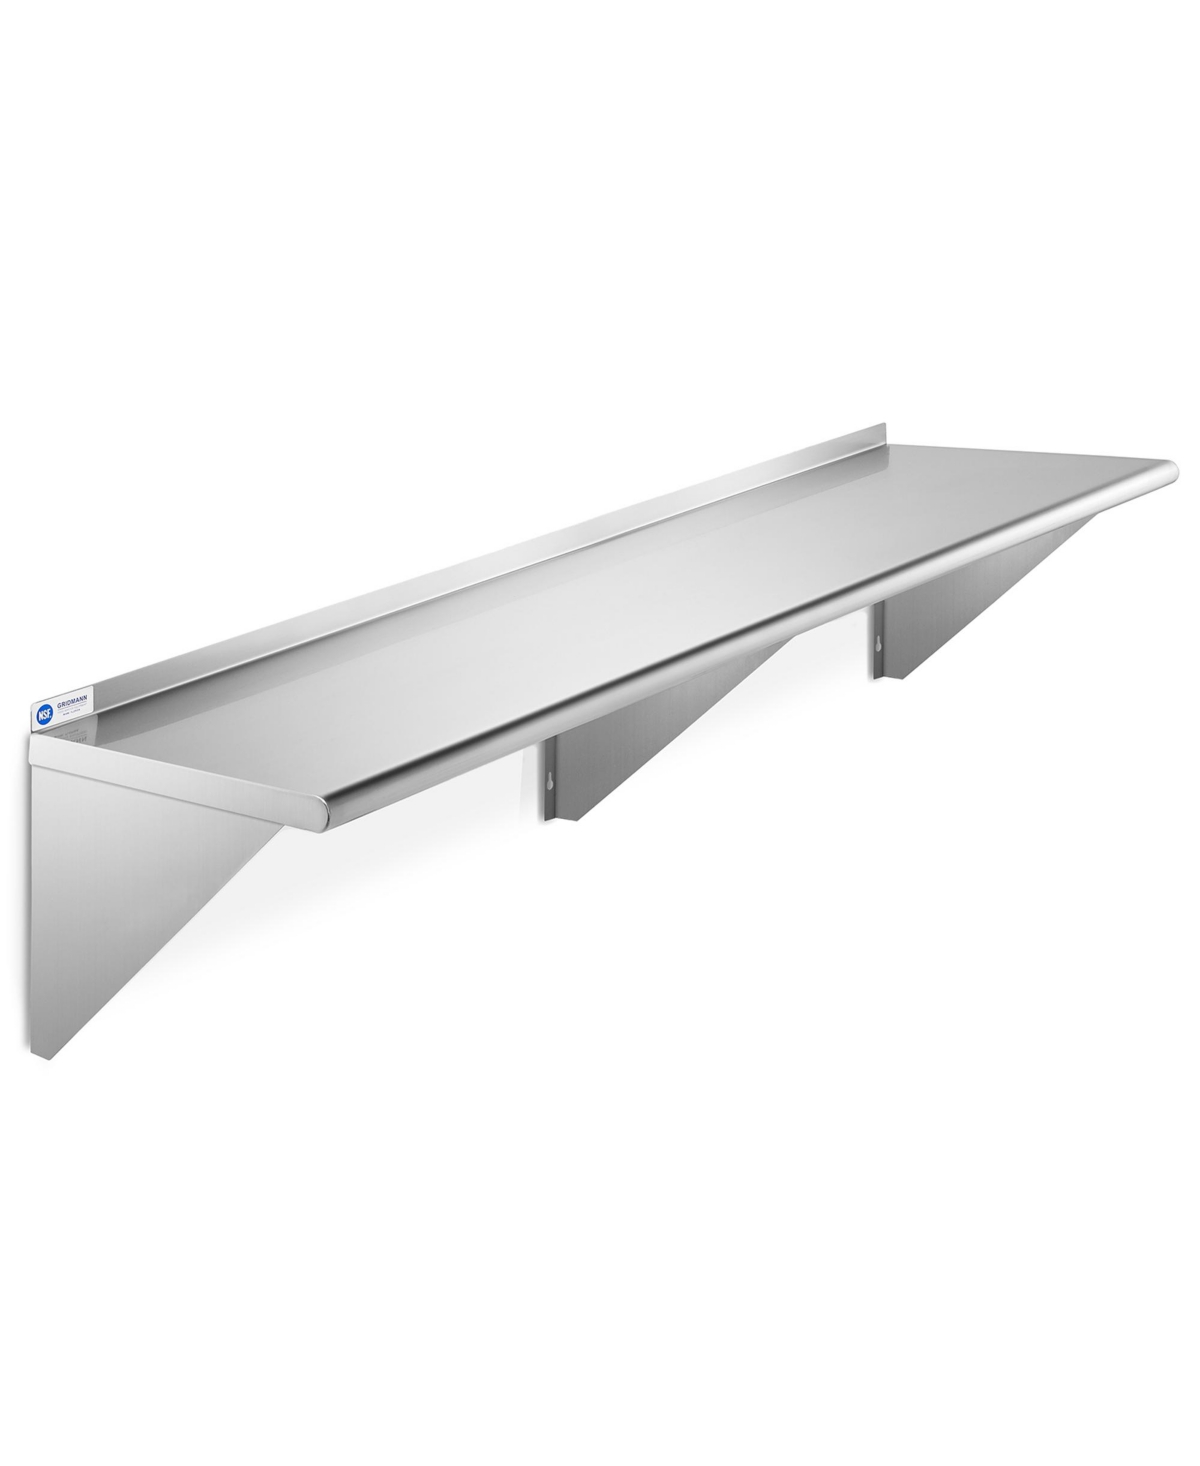 12" x 72" Nsf Stainless Steel Kitchen Wall Mount Shelf w/ Backsplash - Silver